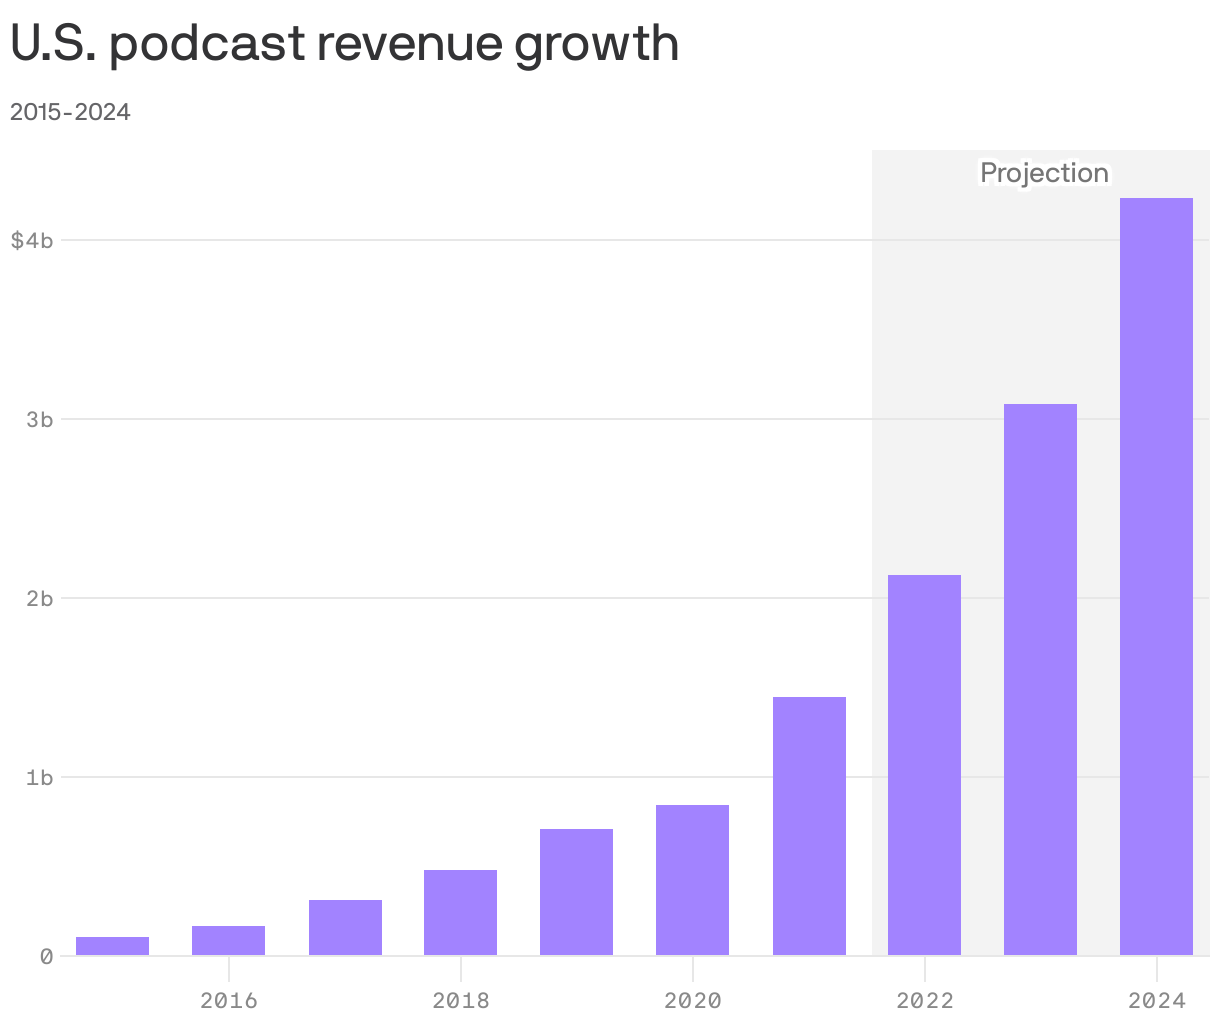 U.S. podcast revenue growth